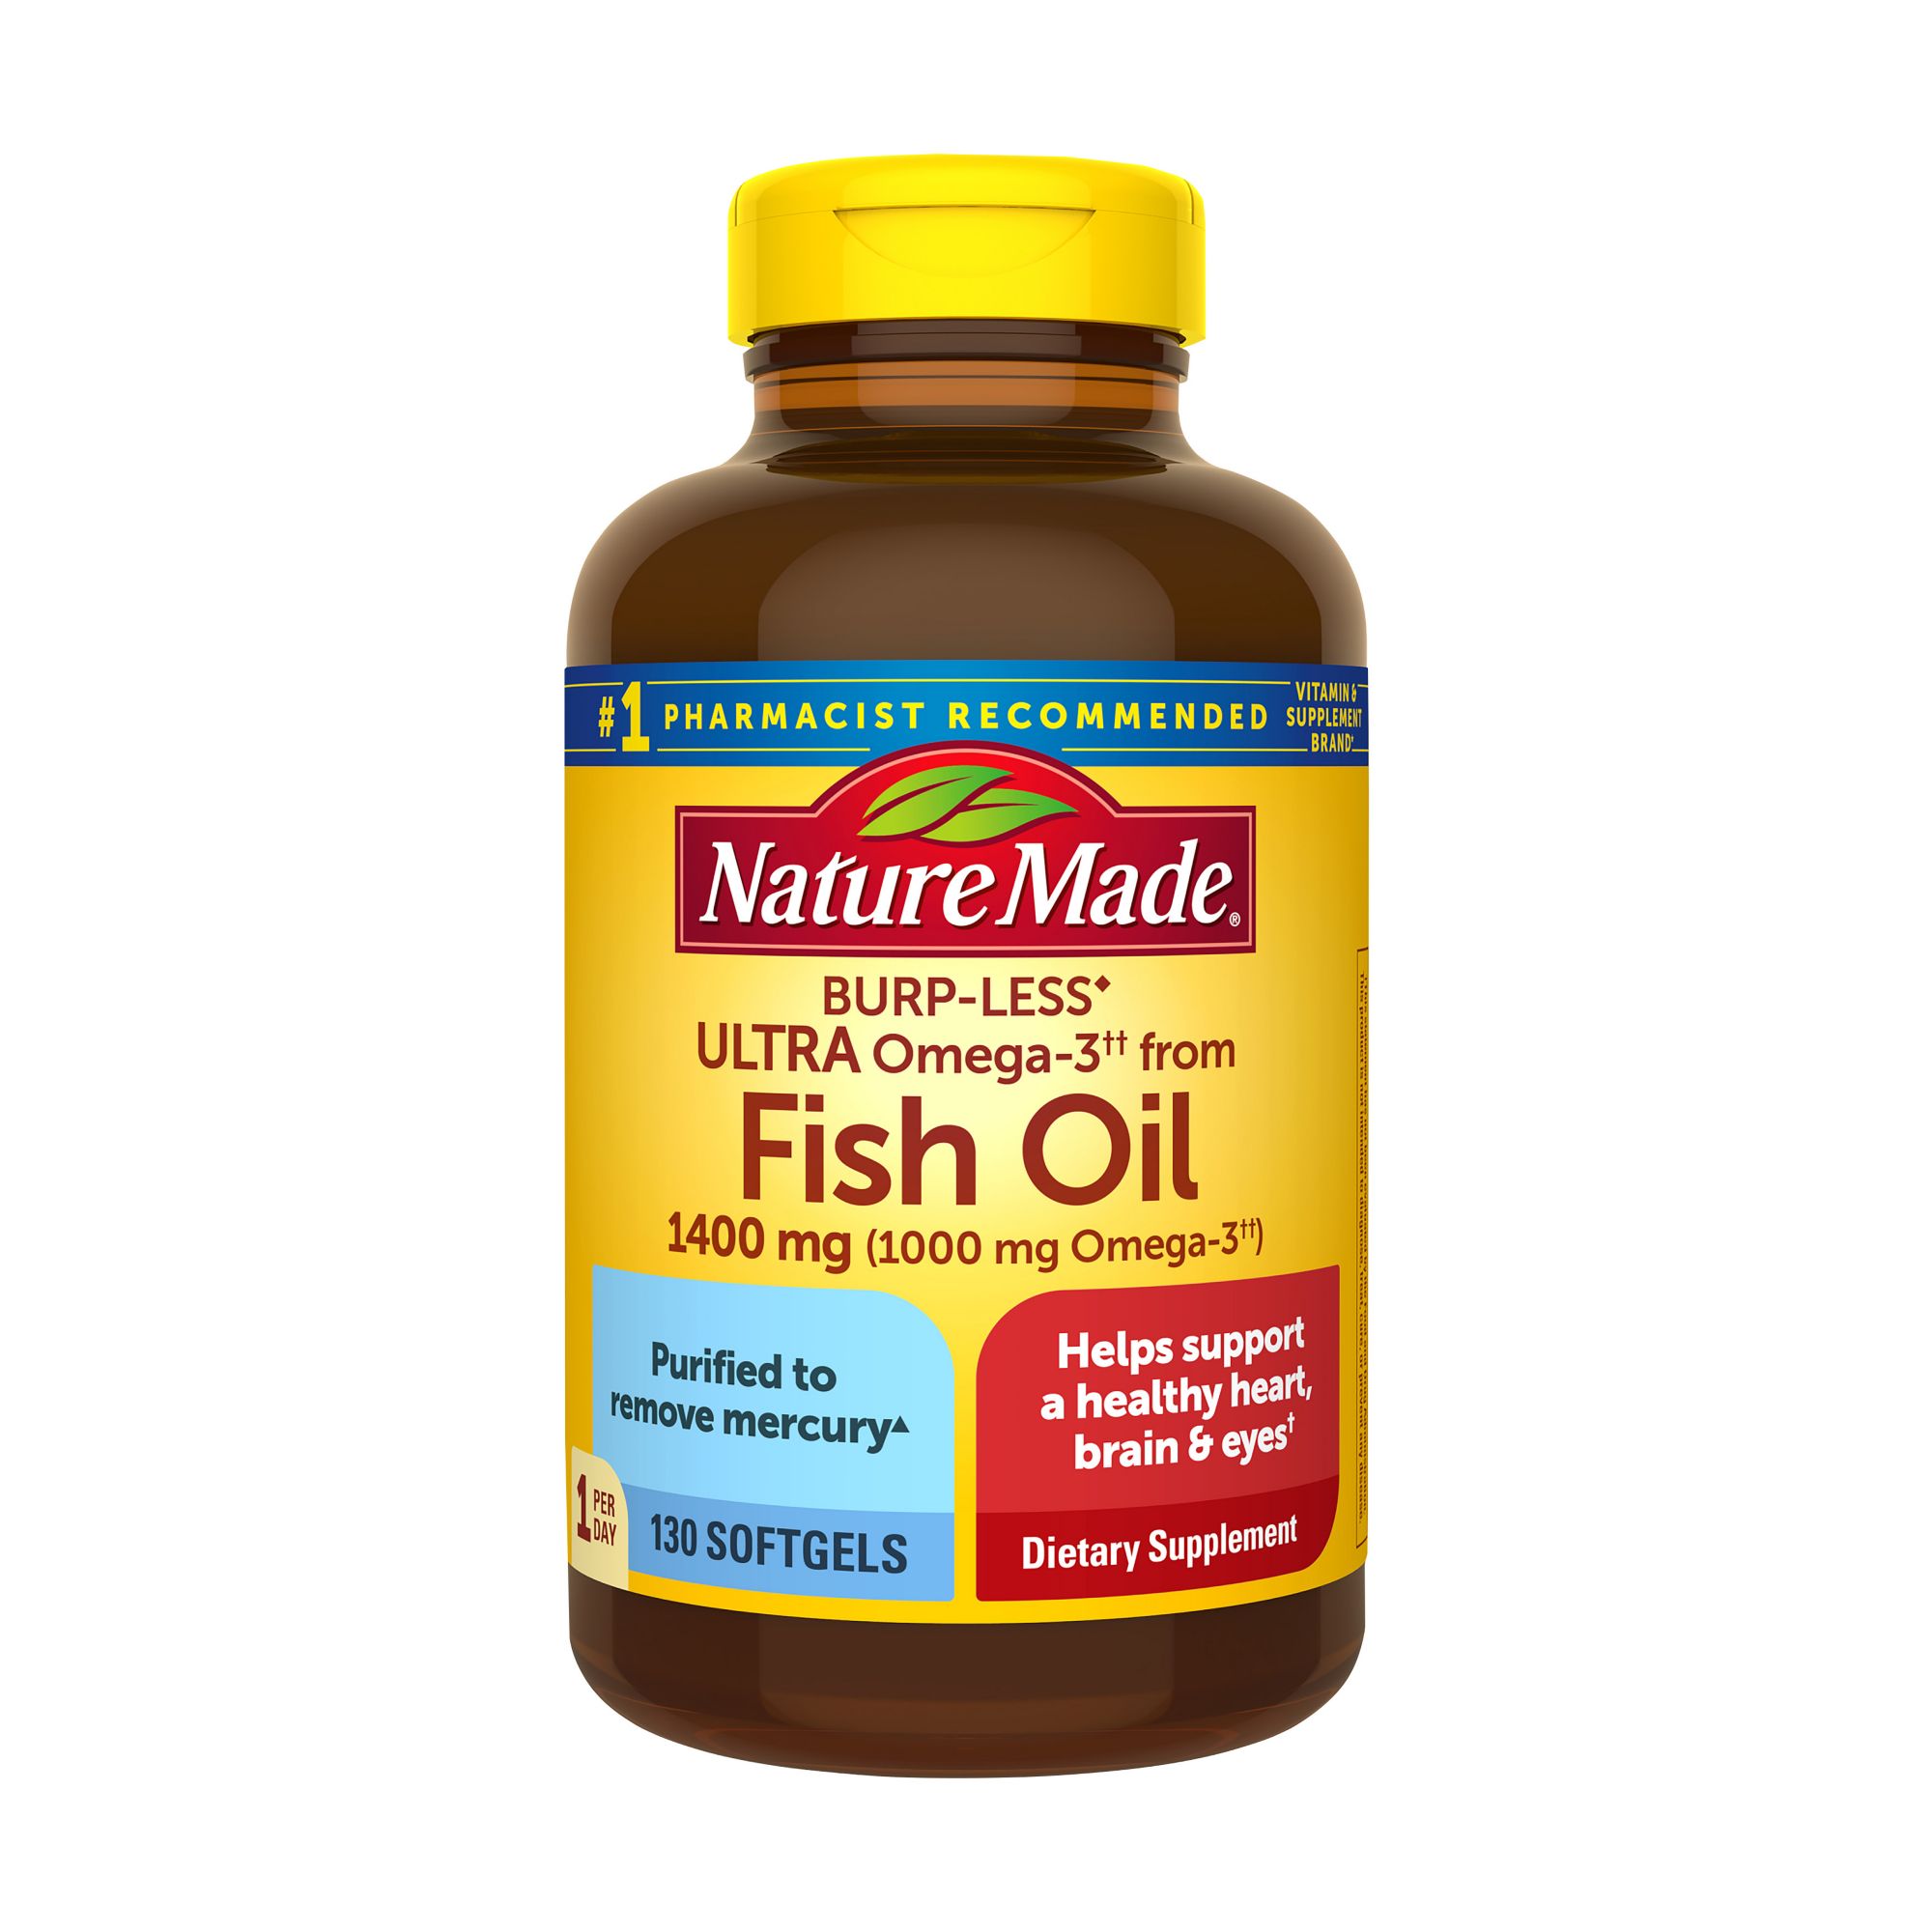 Nature Made 1,400mg Ultra Omega-3 Fish Oil